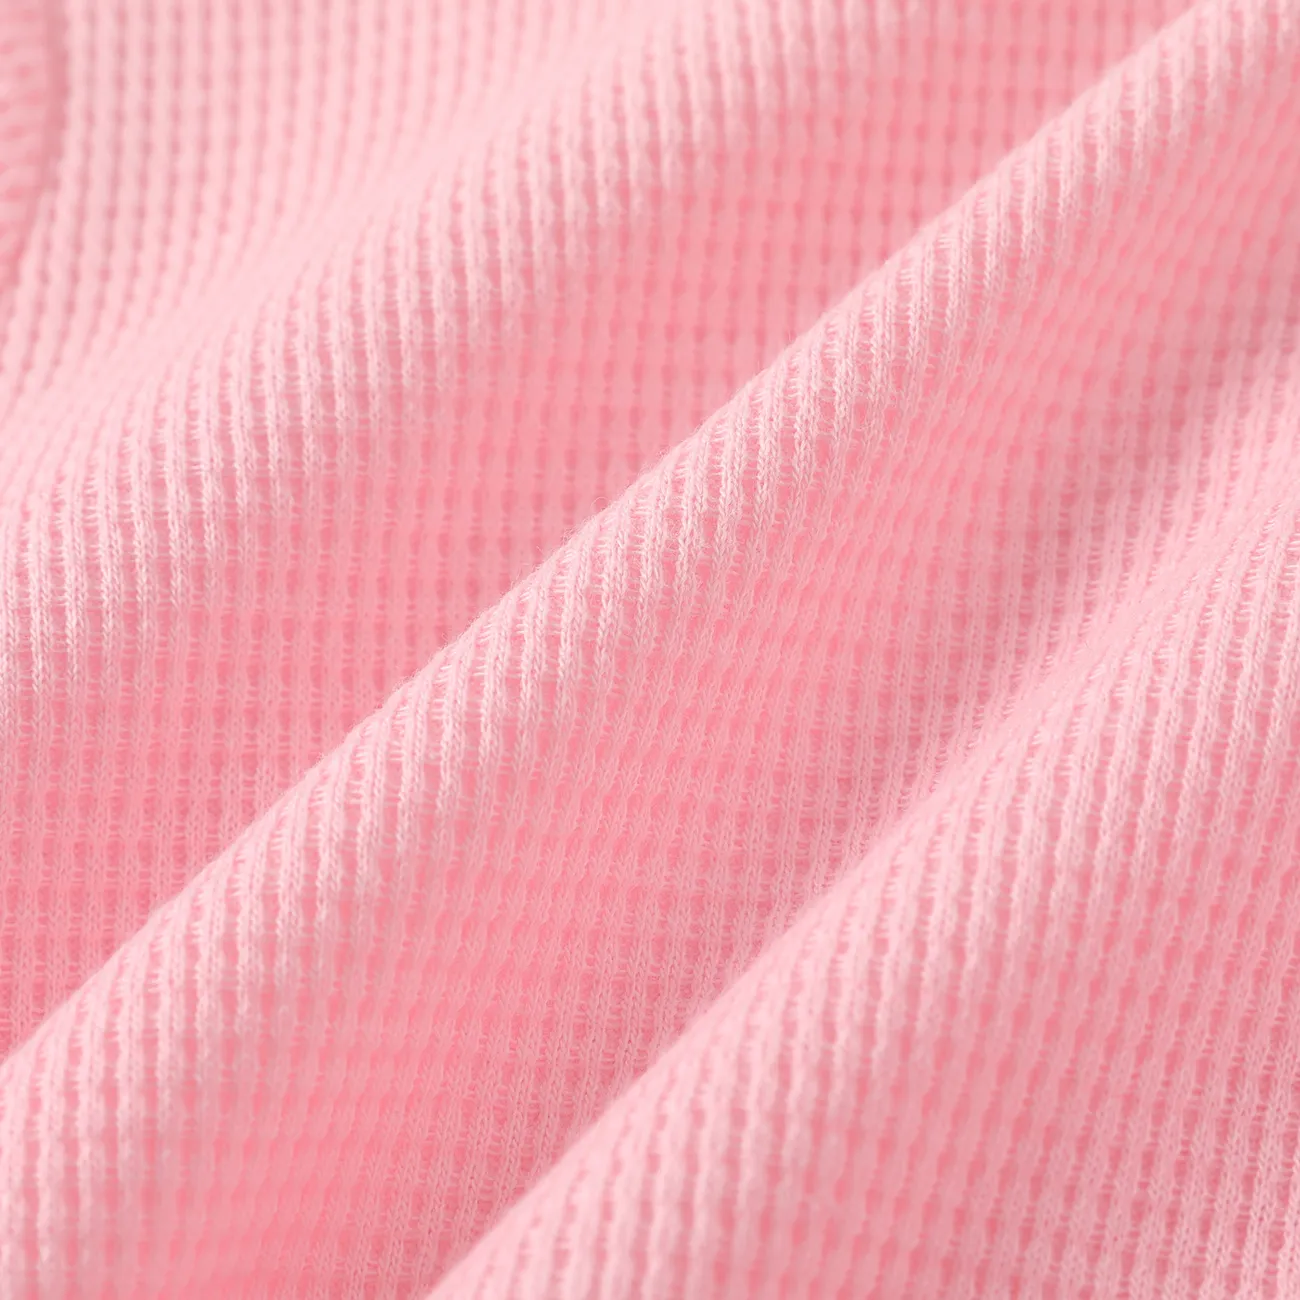 Baby Girl/Boy Hyper-Tactile 3D Letter Long Sleeve Top Pink big image 1